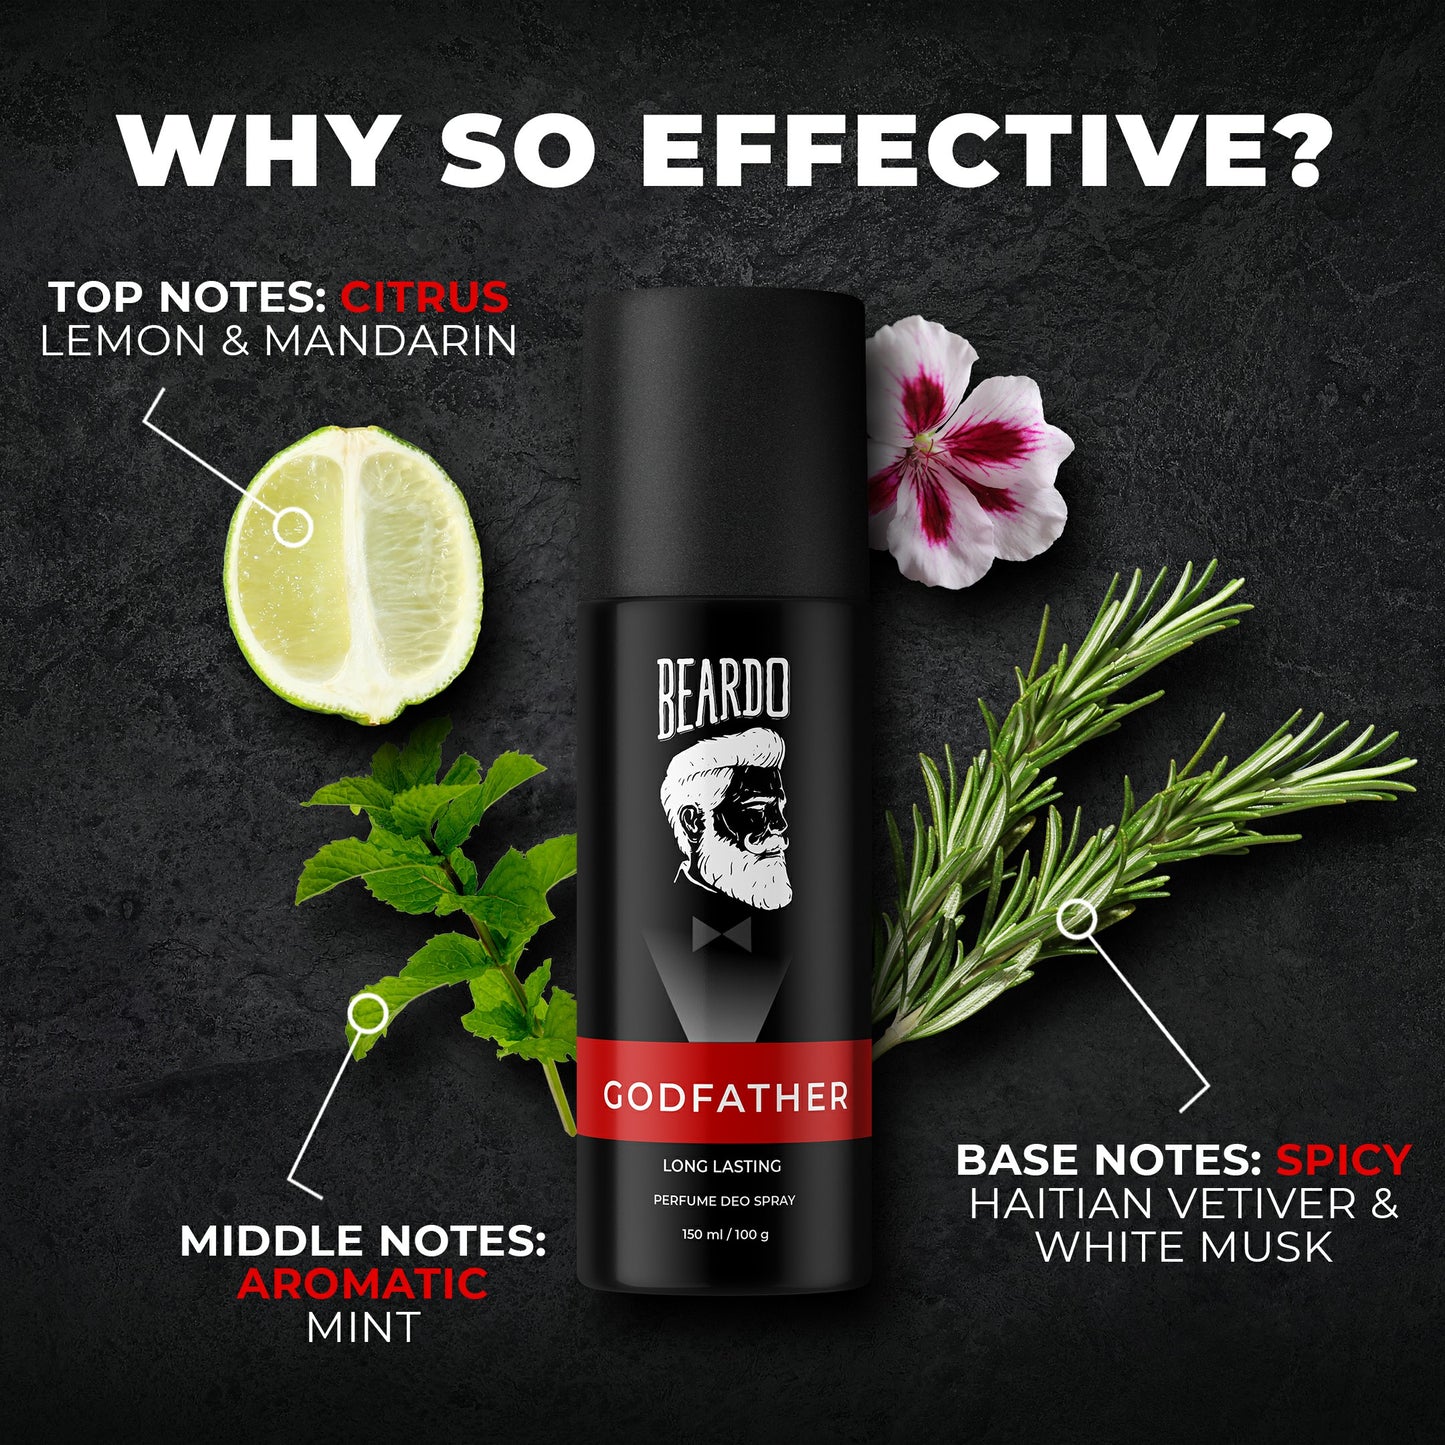 Beardo All-Night Perfume Deo Spray Combo